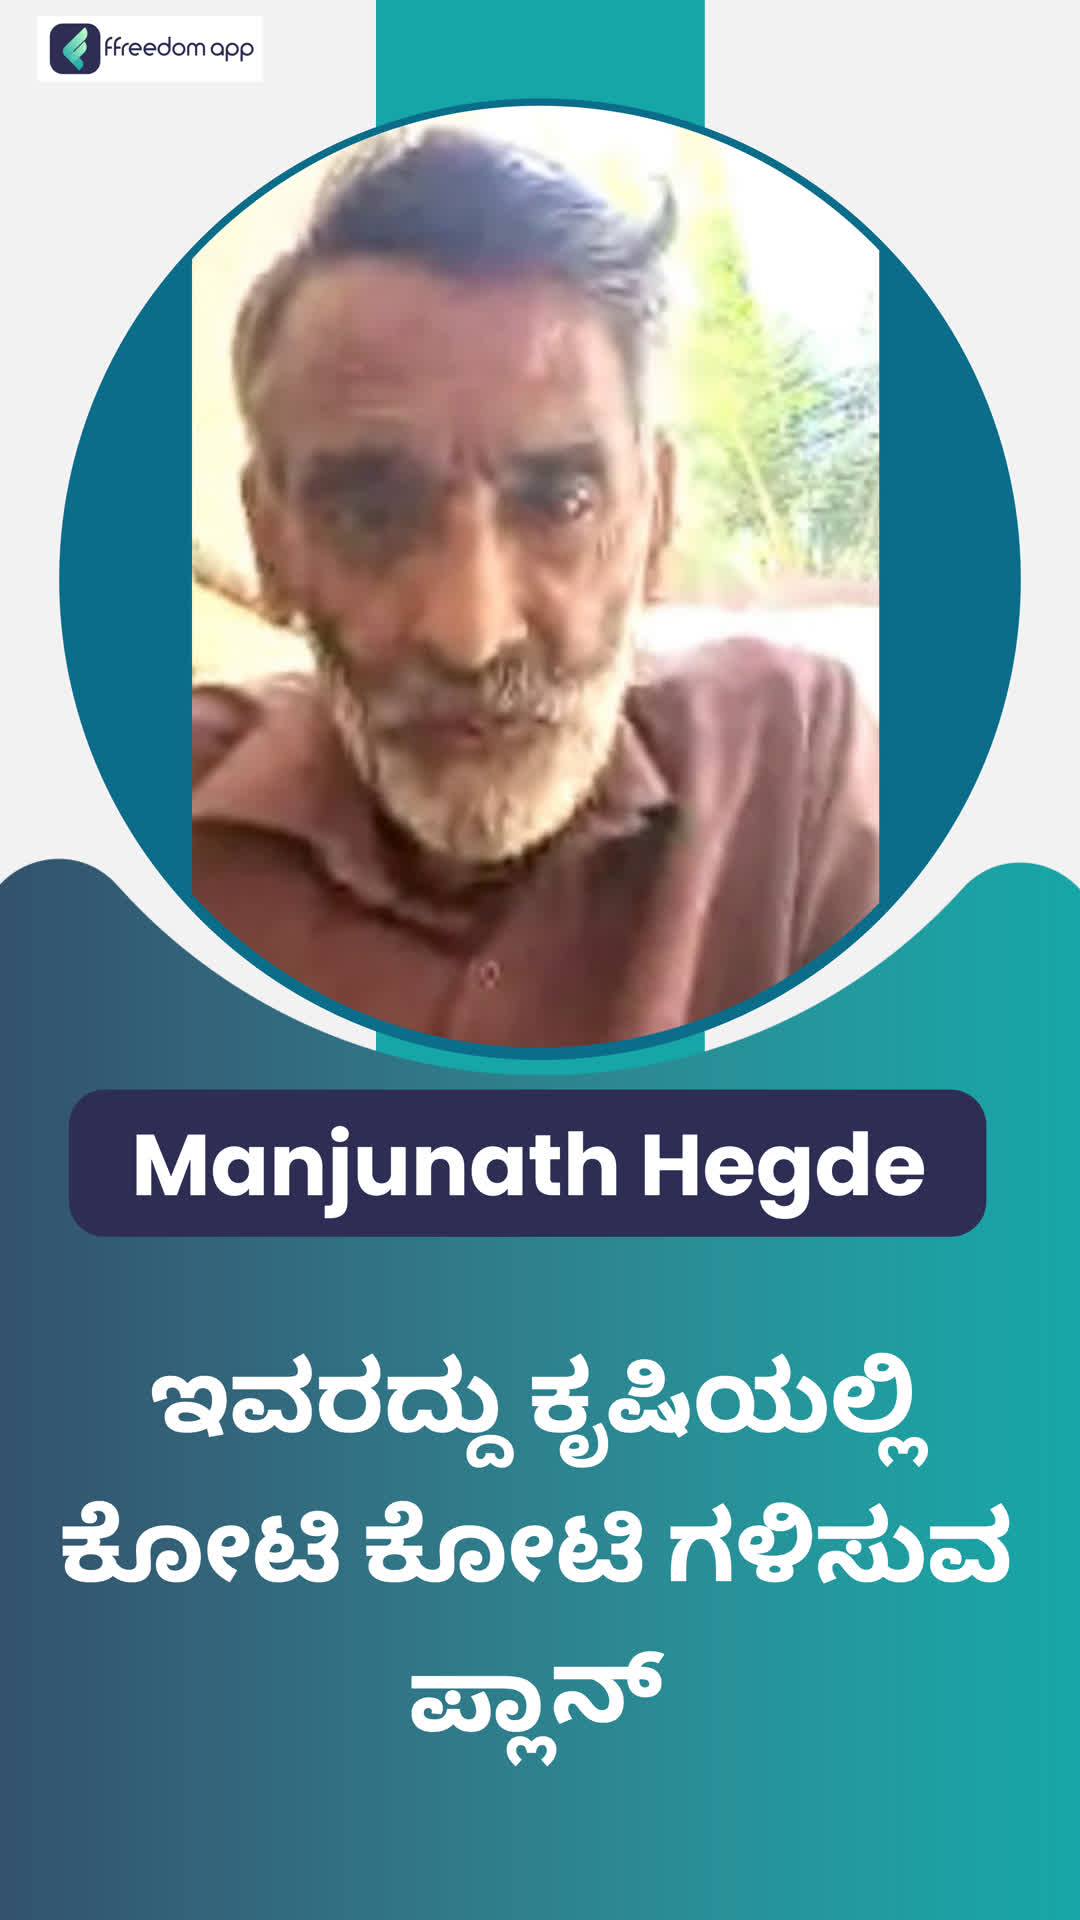 Manjunath HEGADE's Honest Review of ffreedom app - Uttara Kannada ,Karnataka